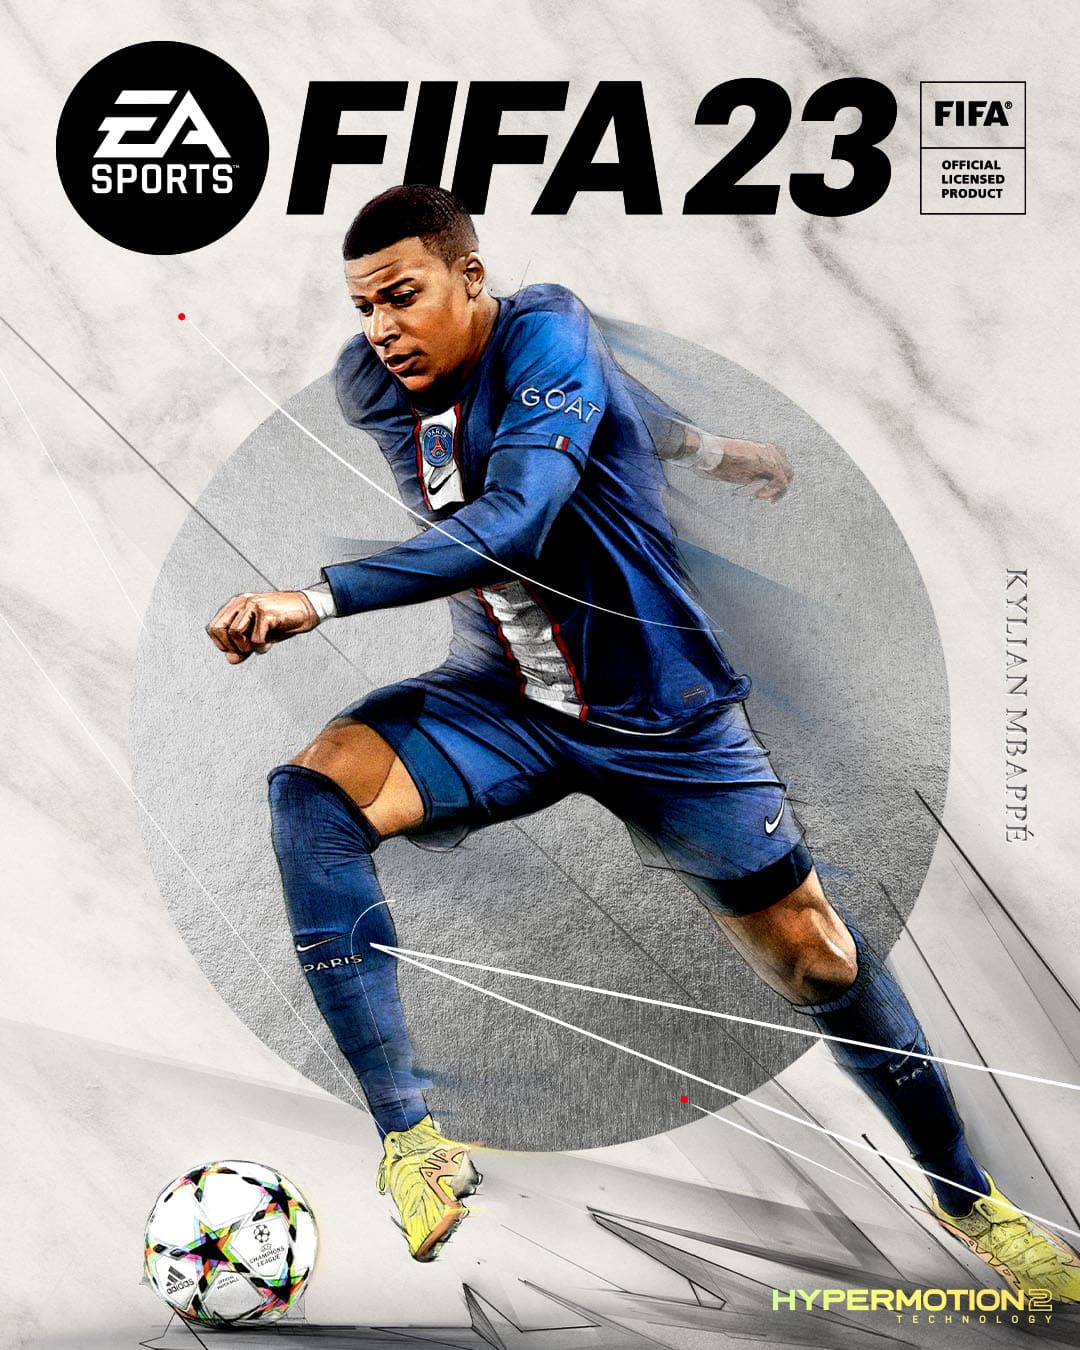 Pre-order FIFA 23: Standard and Ultimate Edition compared